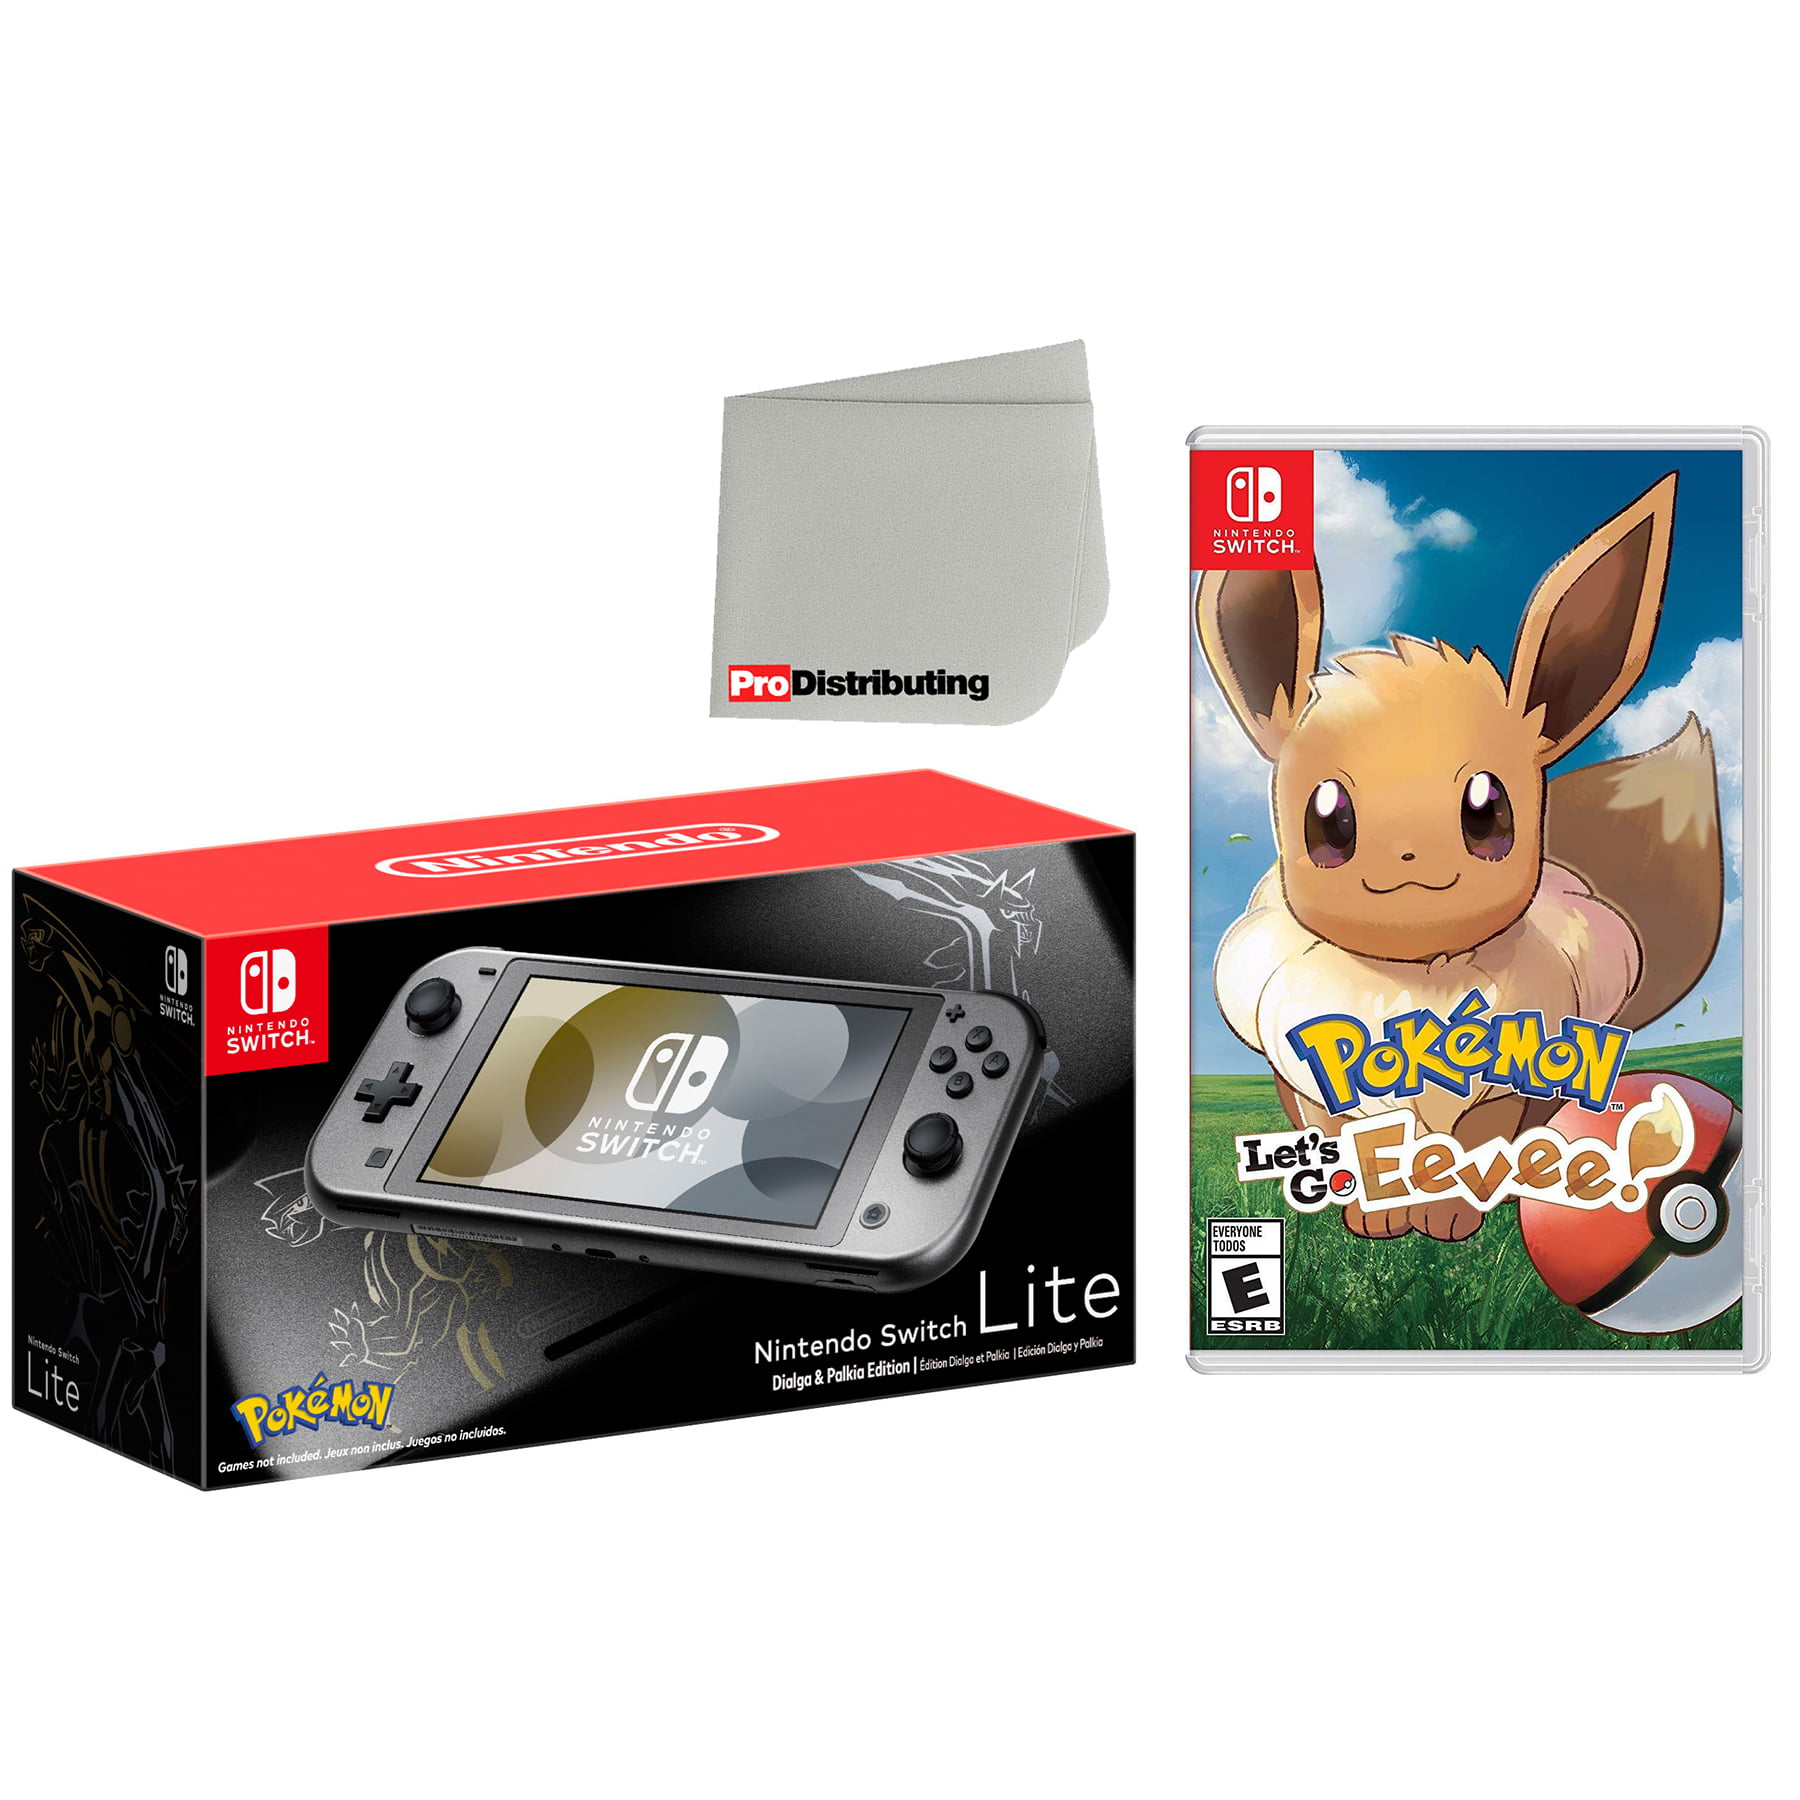 Nintendo Switch Lite Pokemon Dialga & Palkia 32GB Handheld Video Game Console with Pokemon: Go, Eevee! Game Bundle -